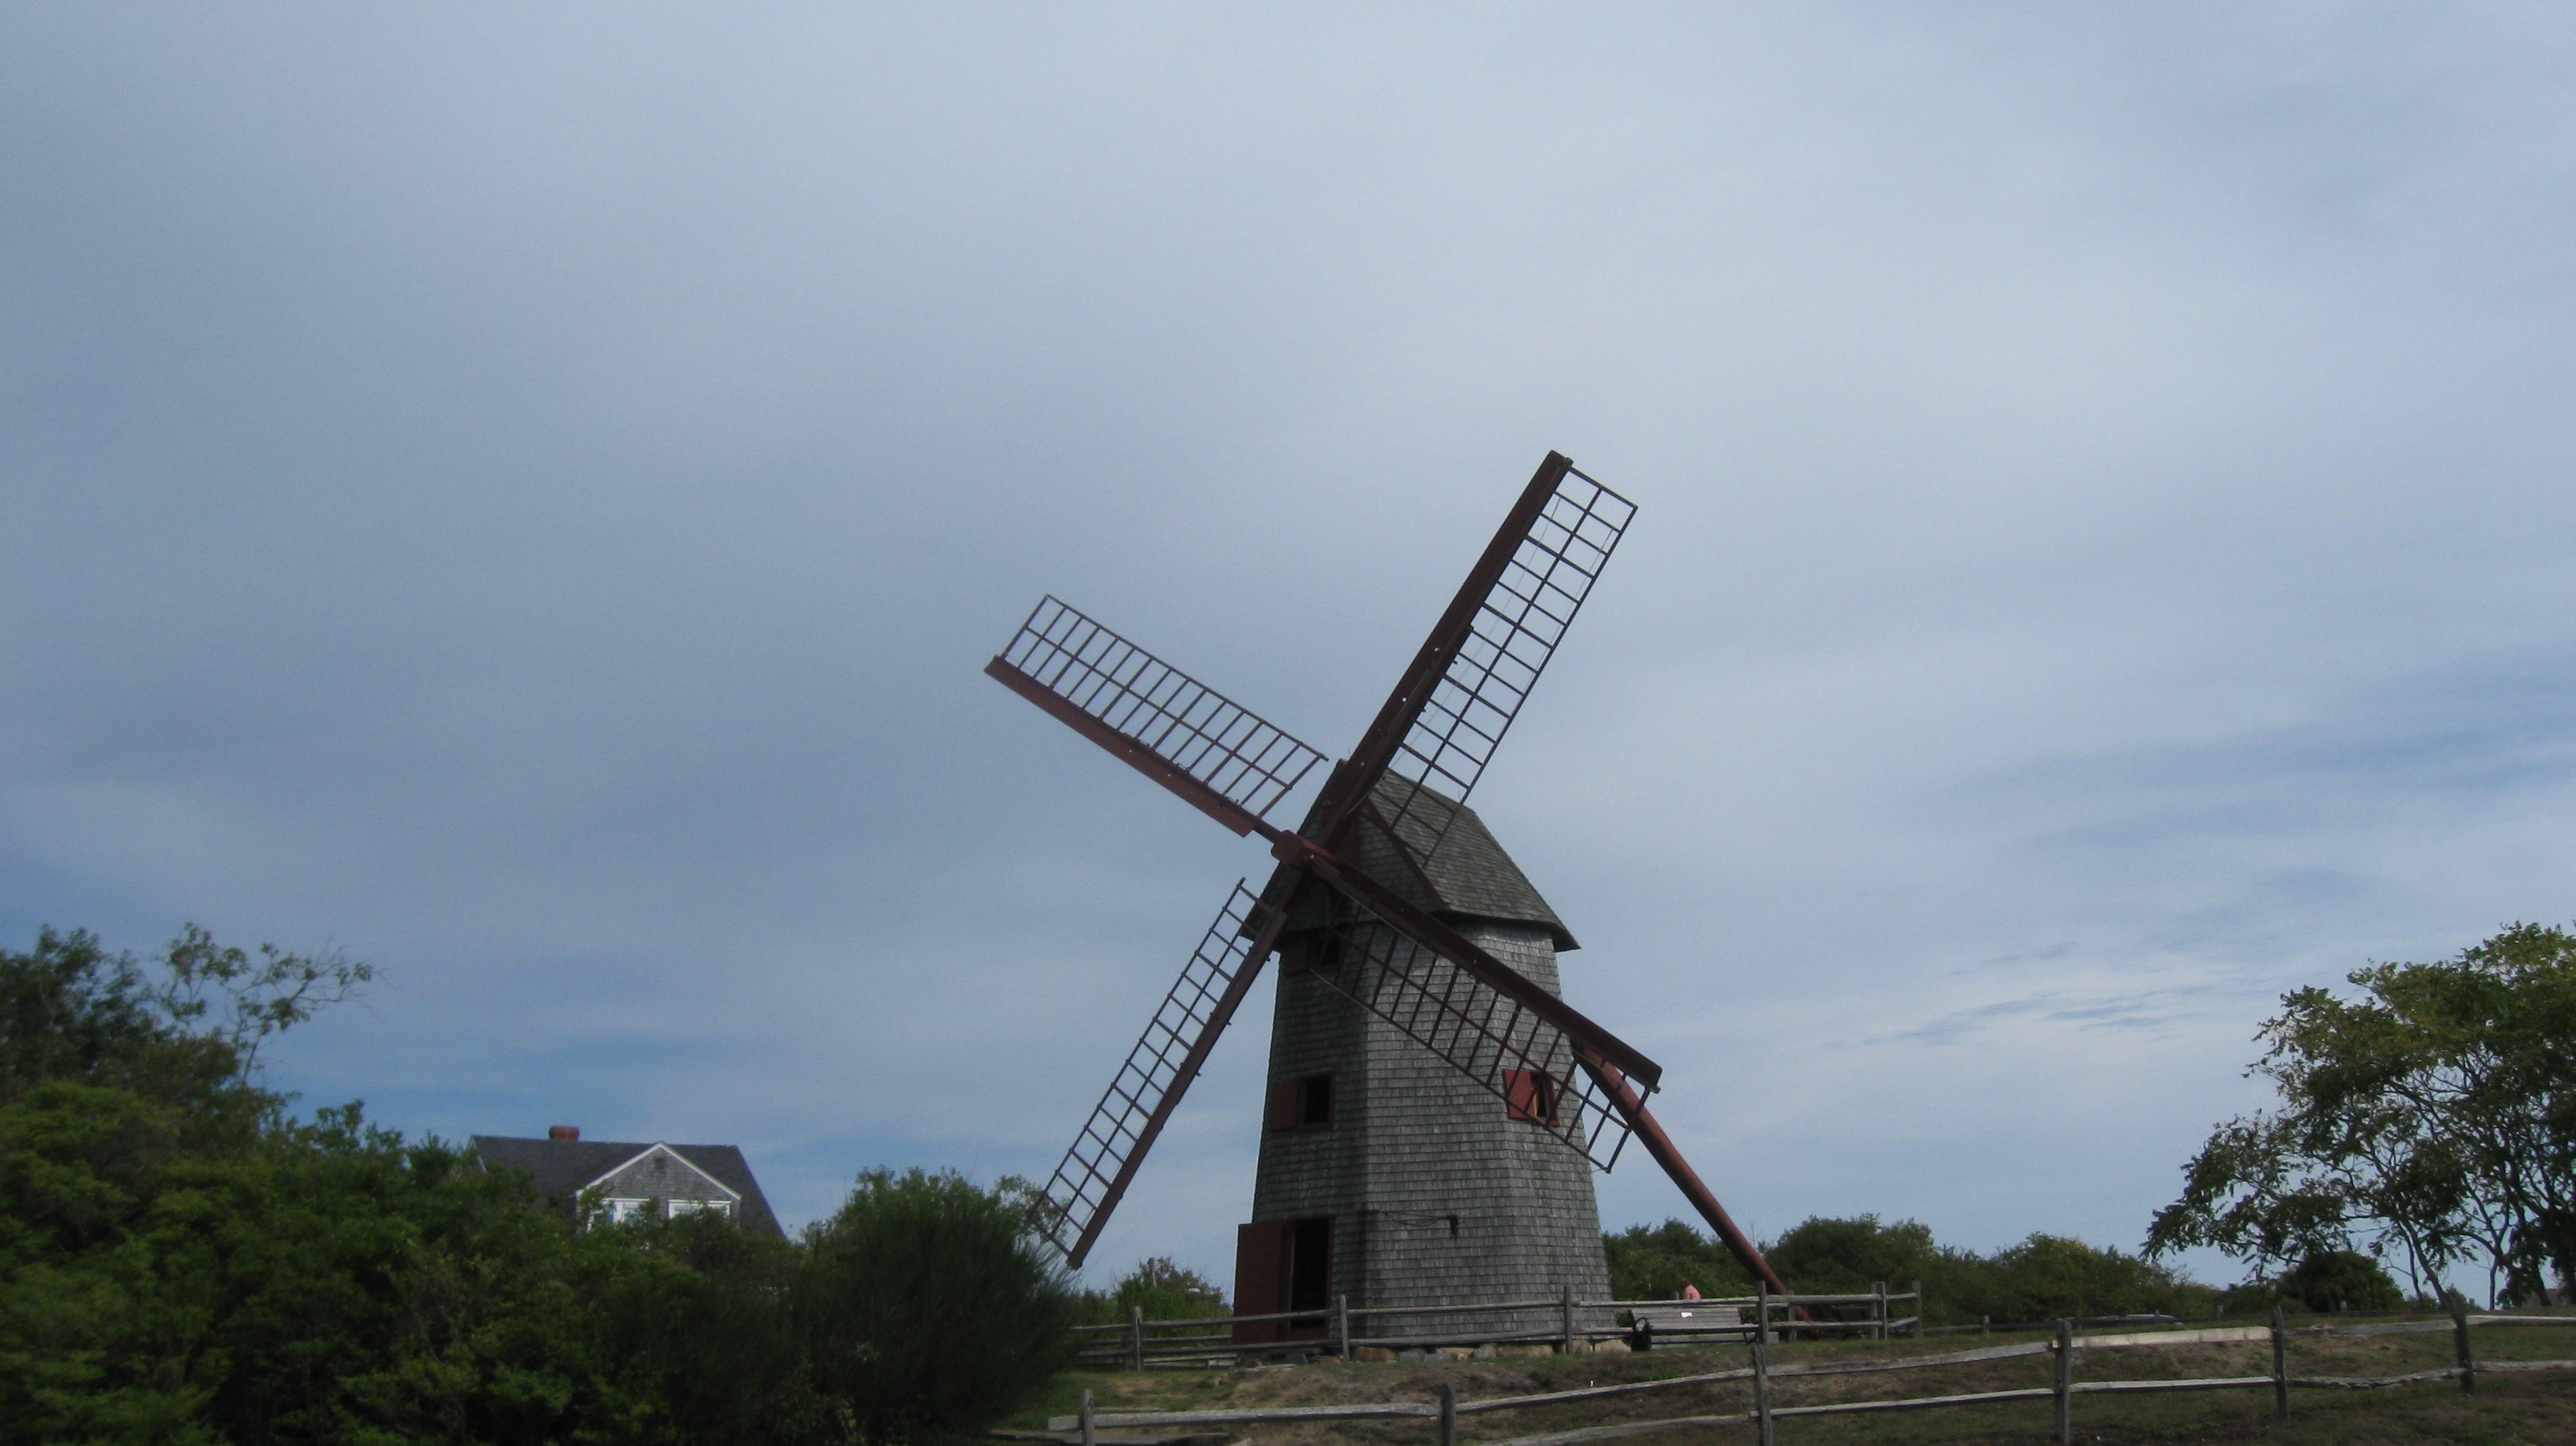 Windmill in Nantucket, taken from the seat of a bike, 2012-10-07